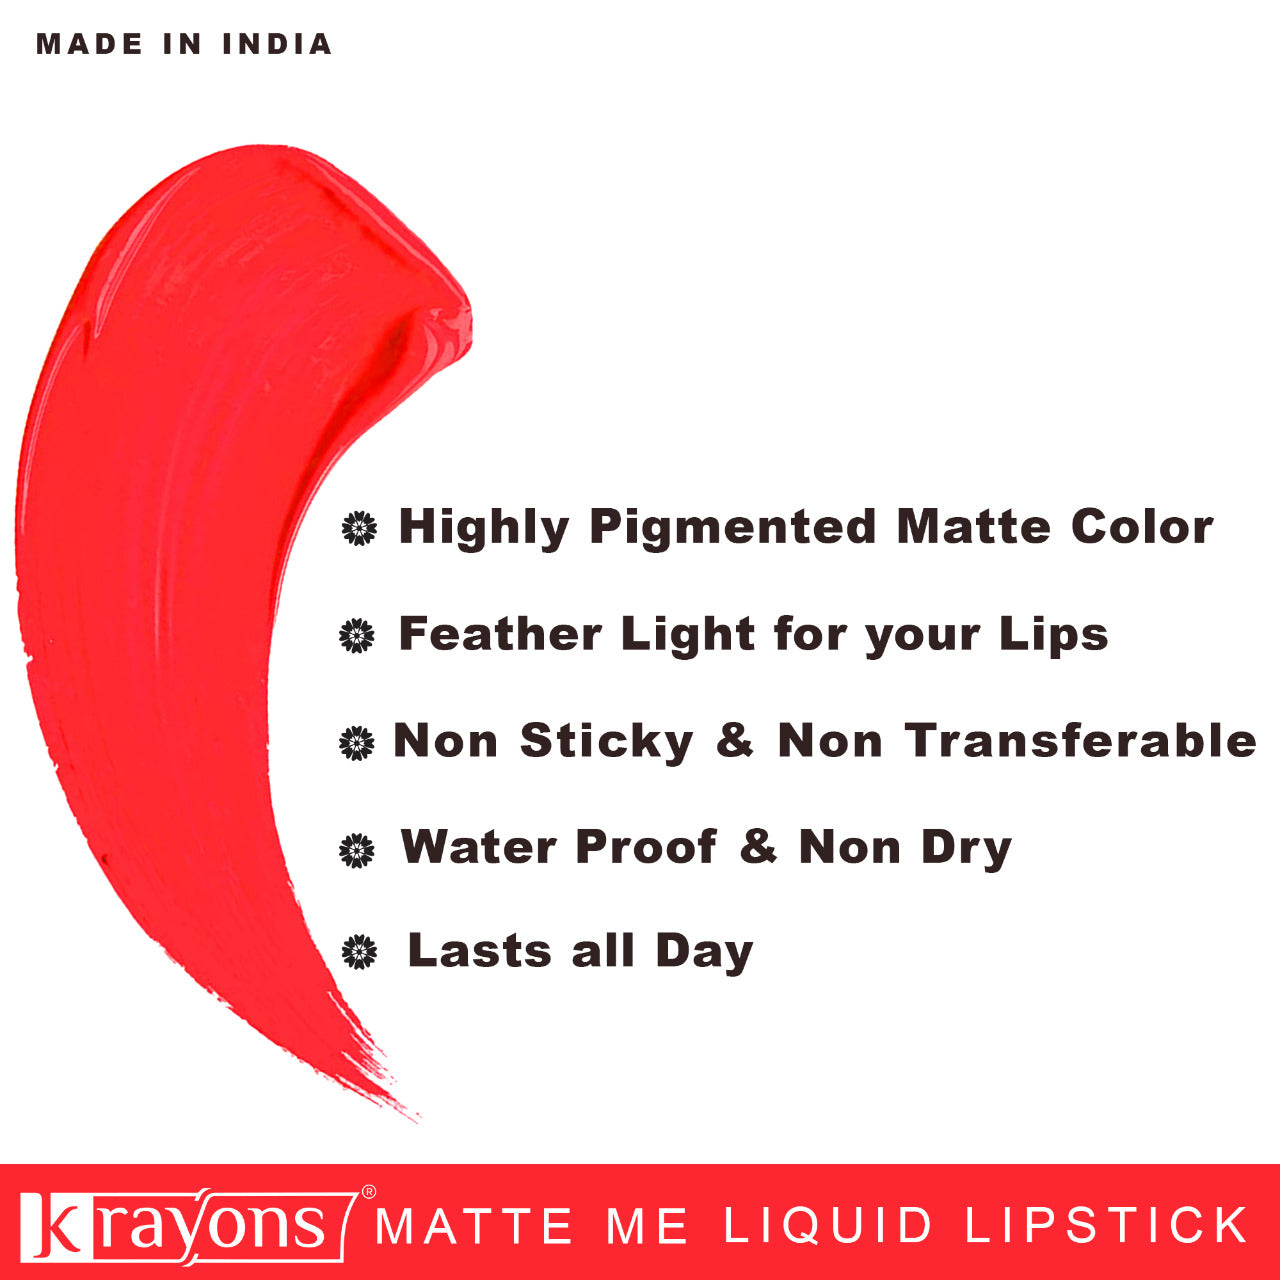 Krayons Matte Me Ultra Smooth Matte Liquid Lip Color, Mask Proof, Waterproof, Longlasting, 5ml Each, Combo, Pack of 2 (Sunset Orange, Pink Fever)